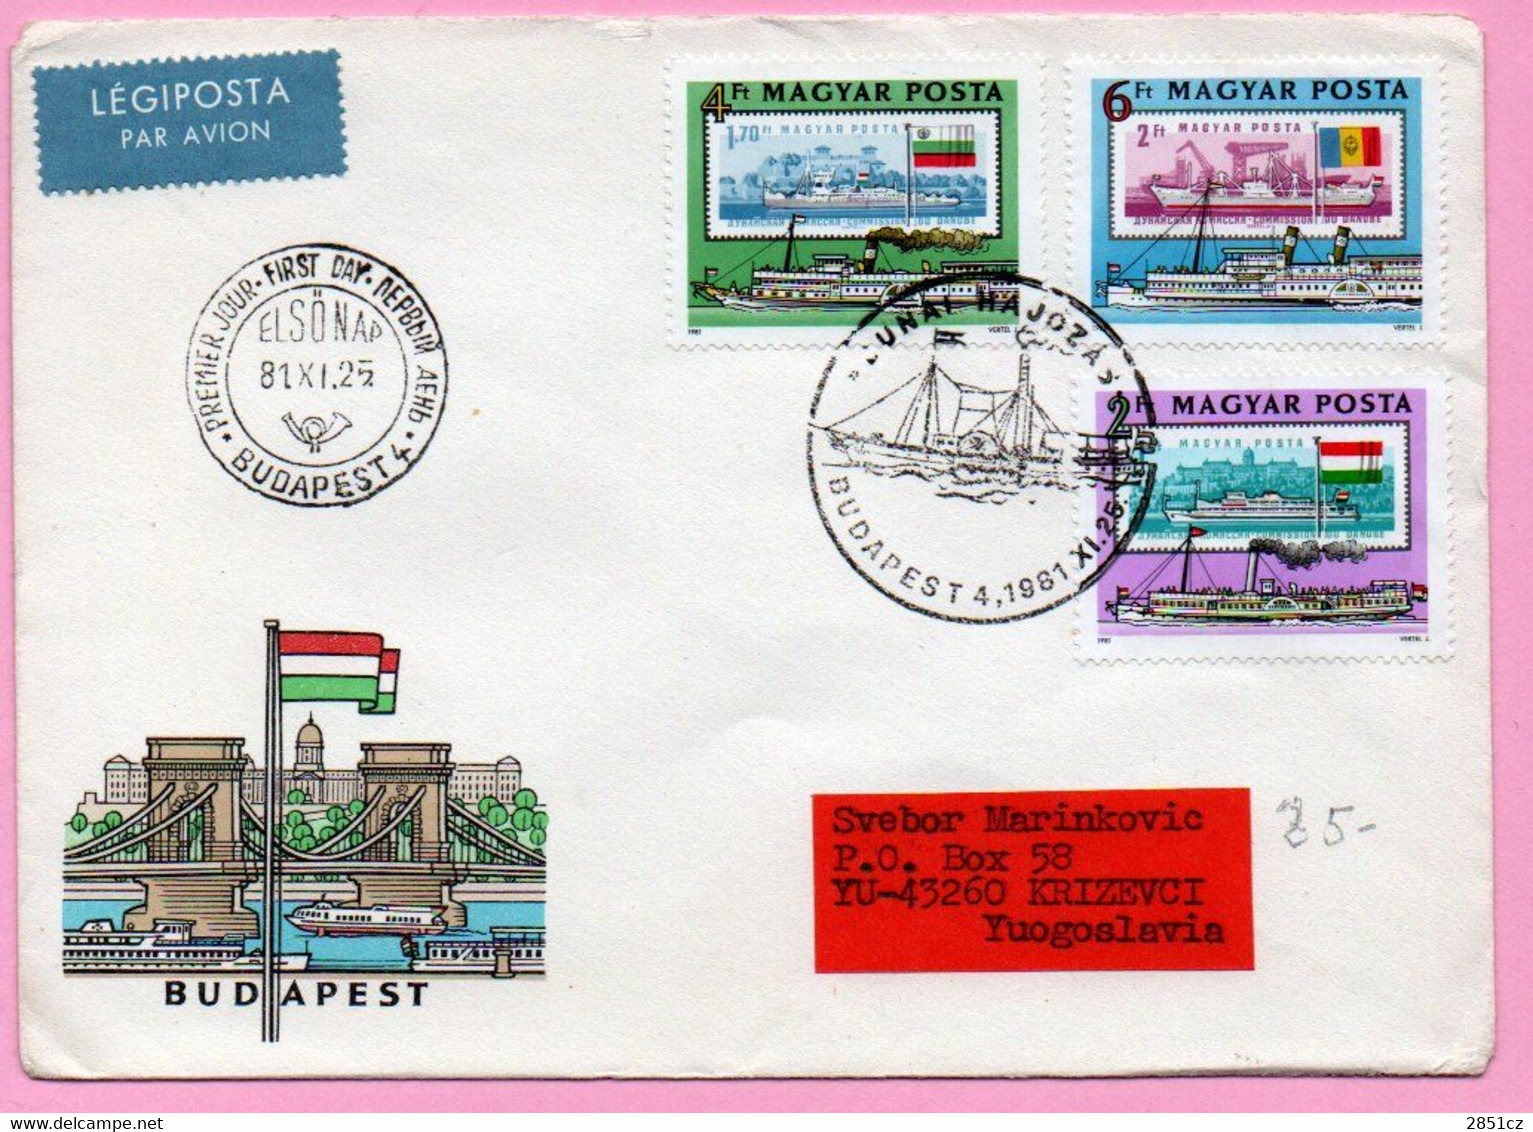 Letter - Stamp Ships / Postmark Premier Jour/First Day/Dunai Hajozas, Budapest, 1981., Hungary, Air Mail - Briefe U. Dokumente